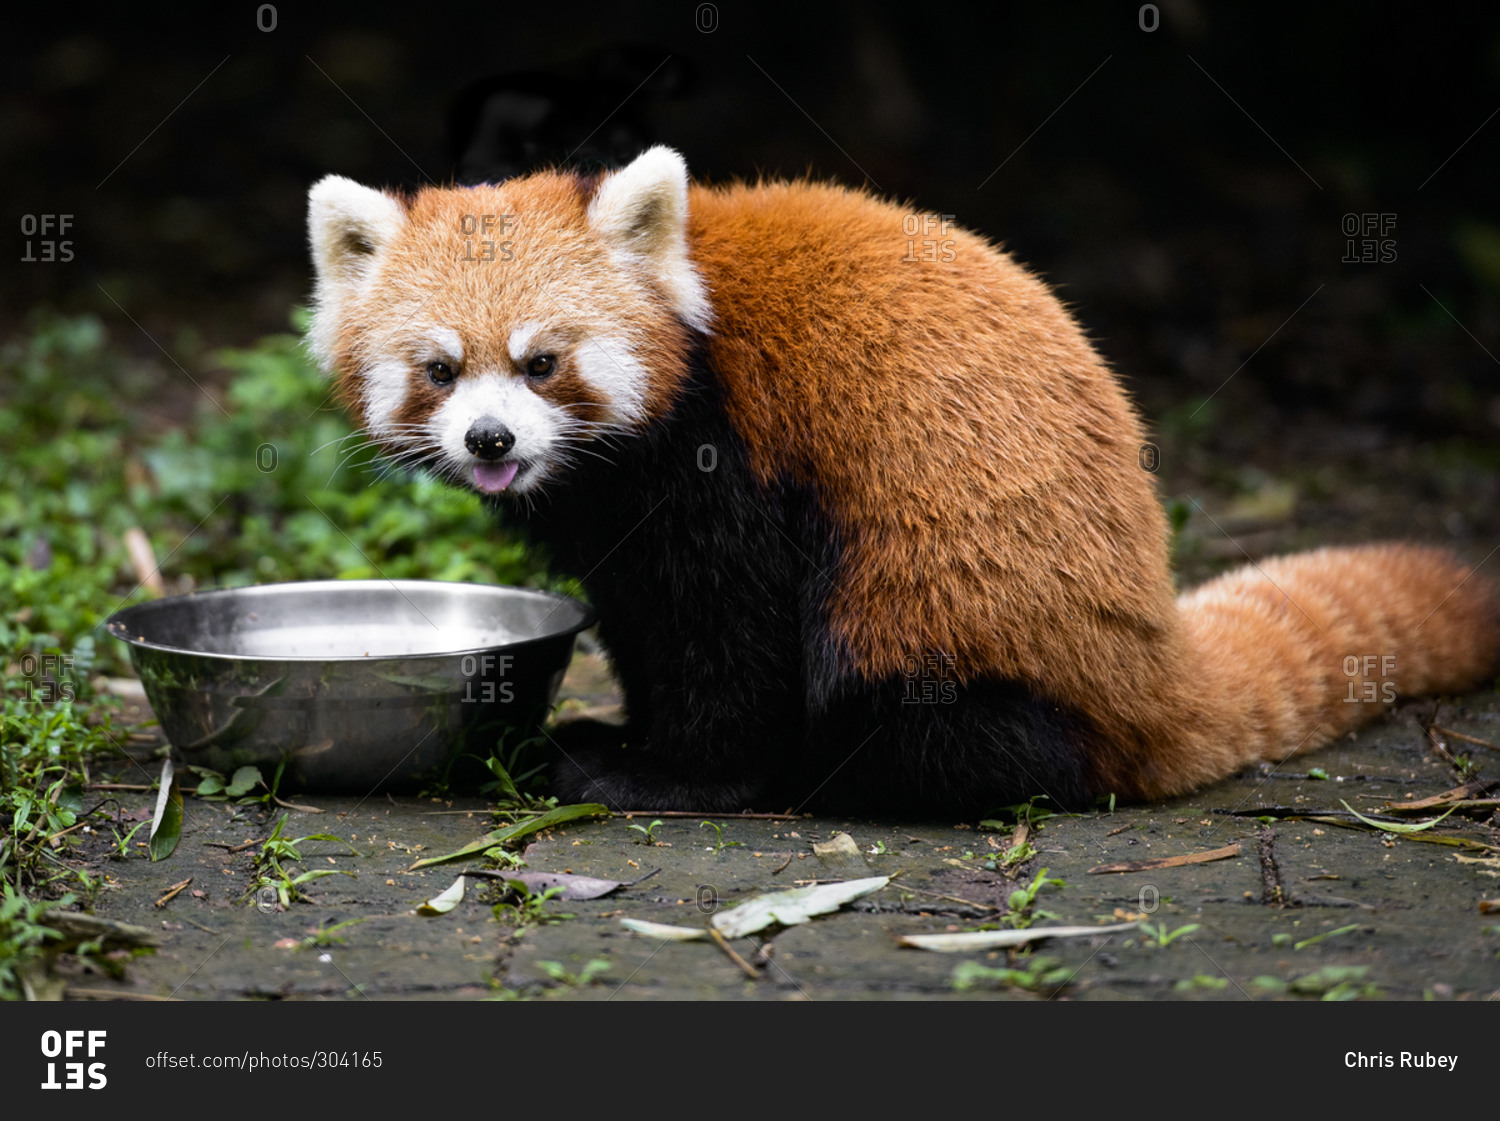 Red panda eating from a metal bowl